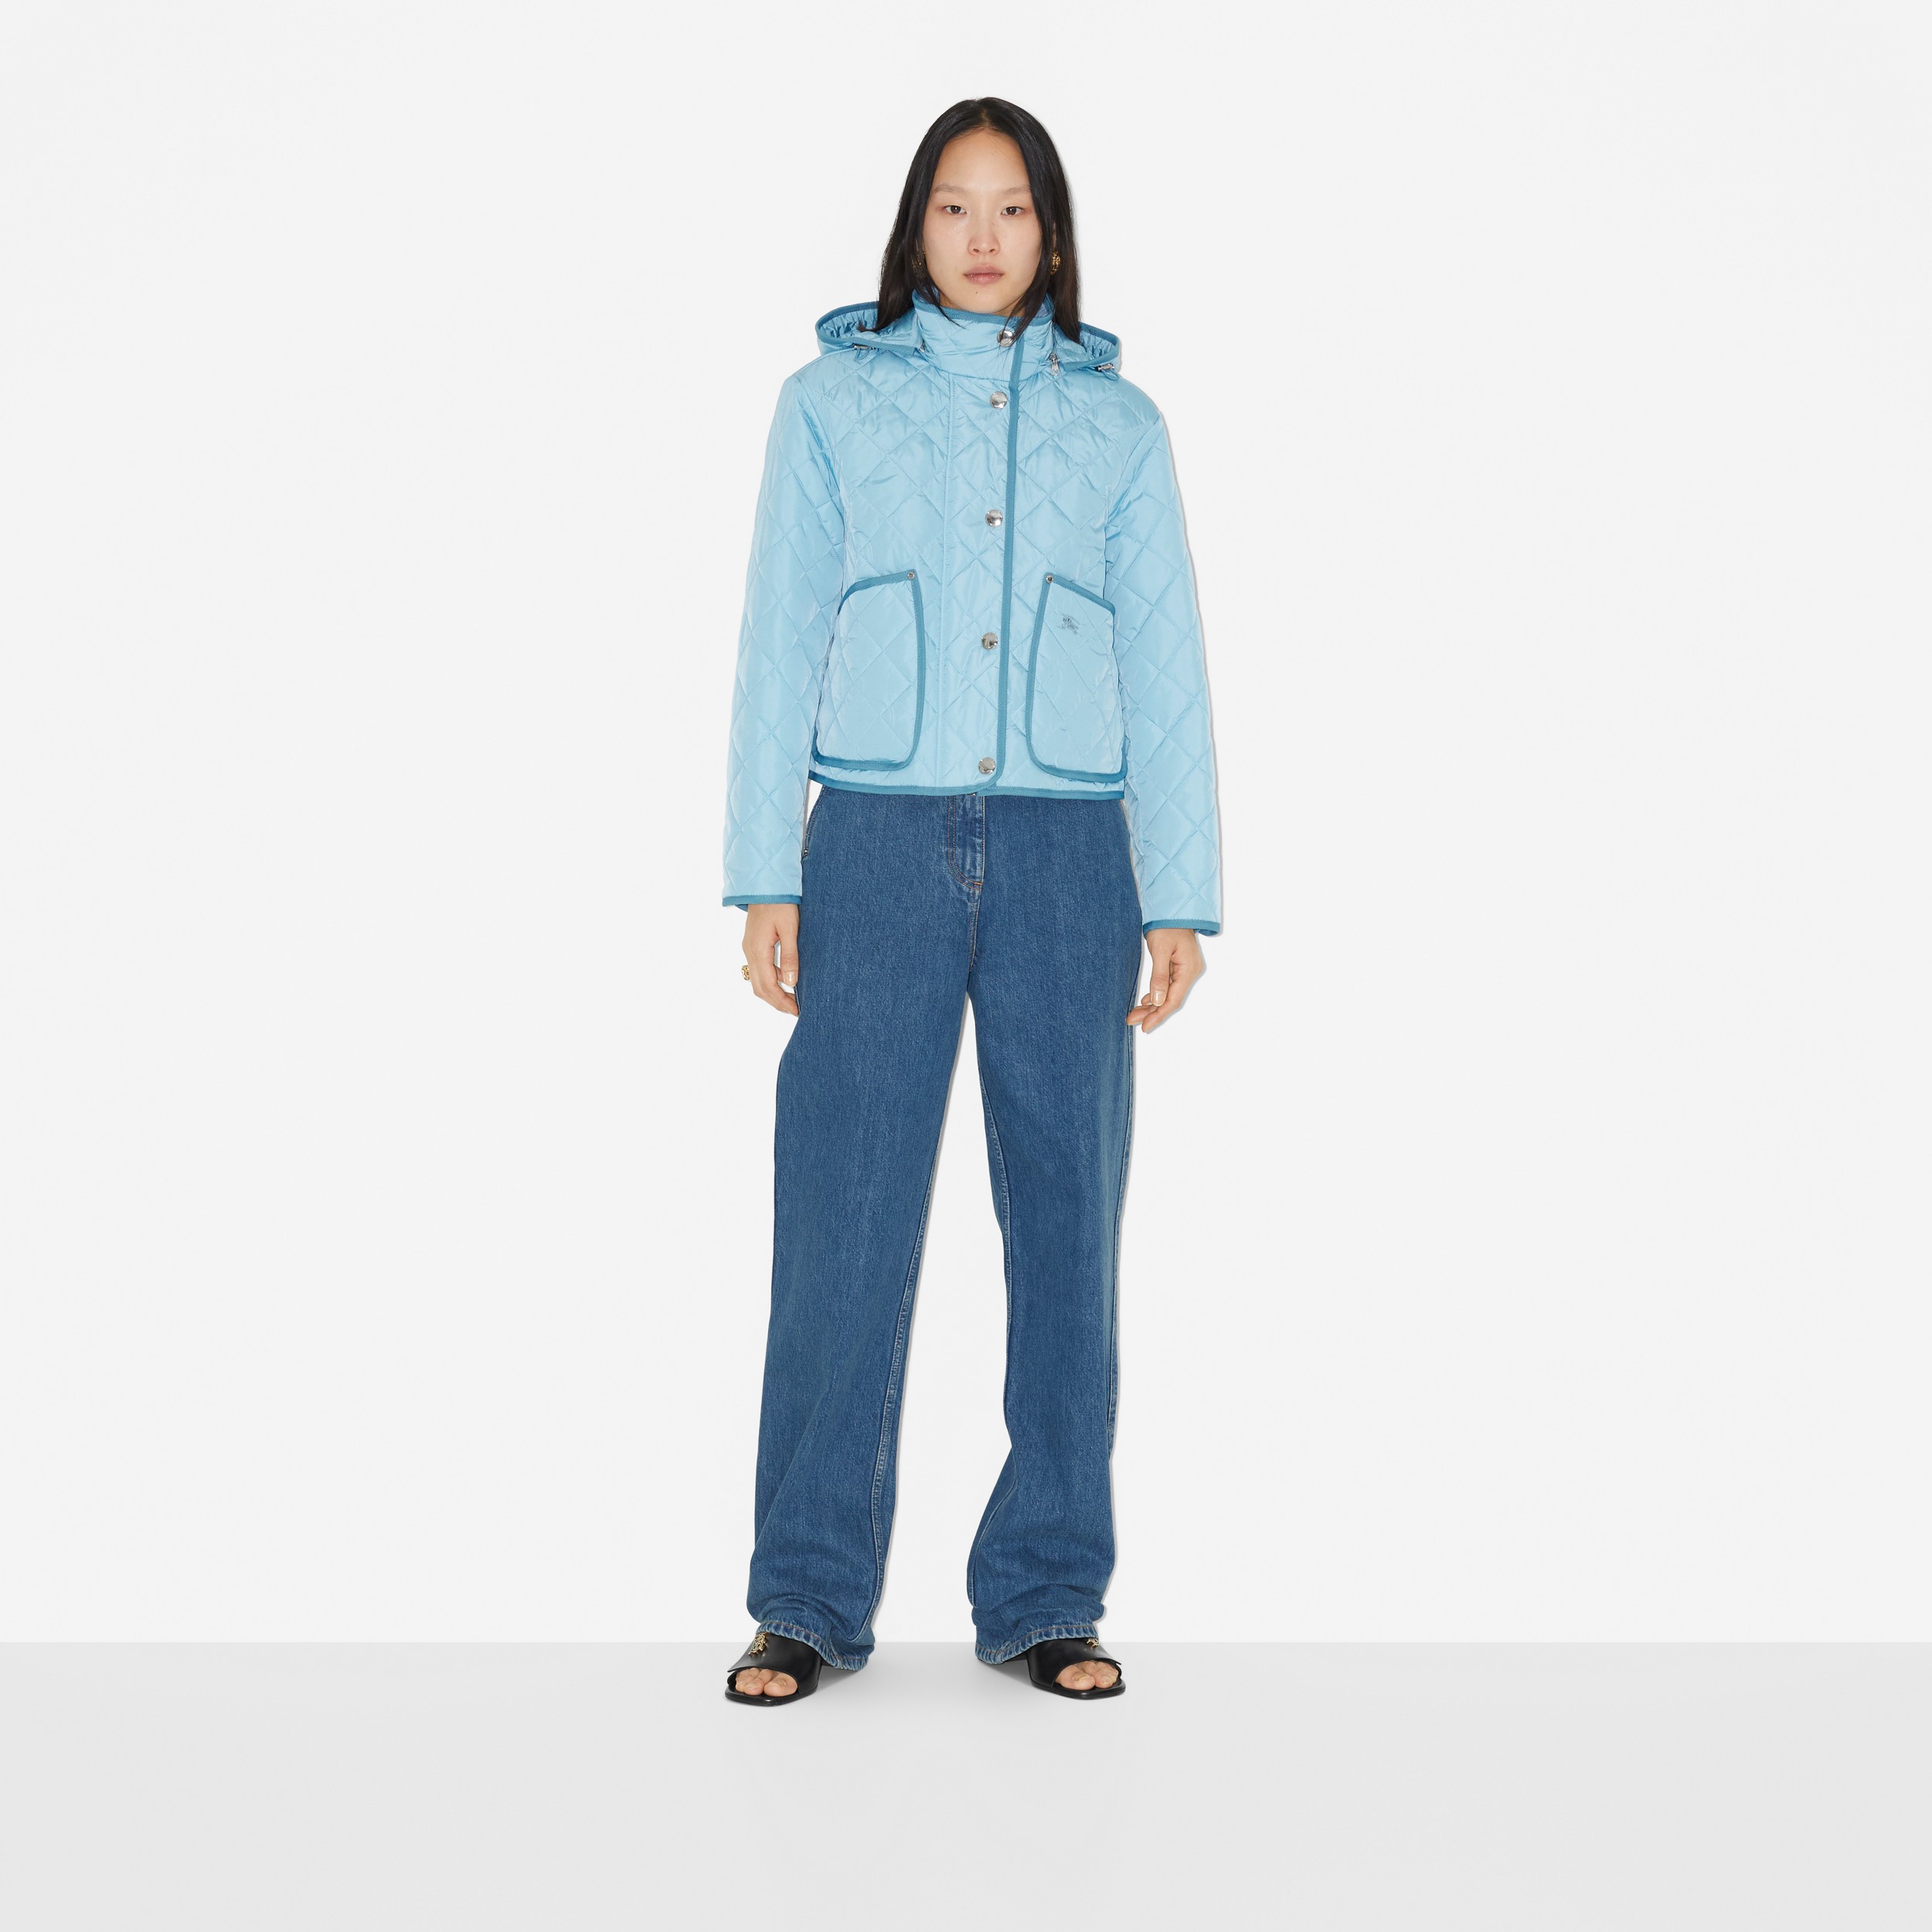 Cropped-Jacke aus Nylon in Rautensteppung (Kühles Denimblau) - Damen | Burberry® - 2